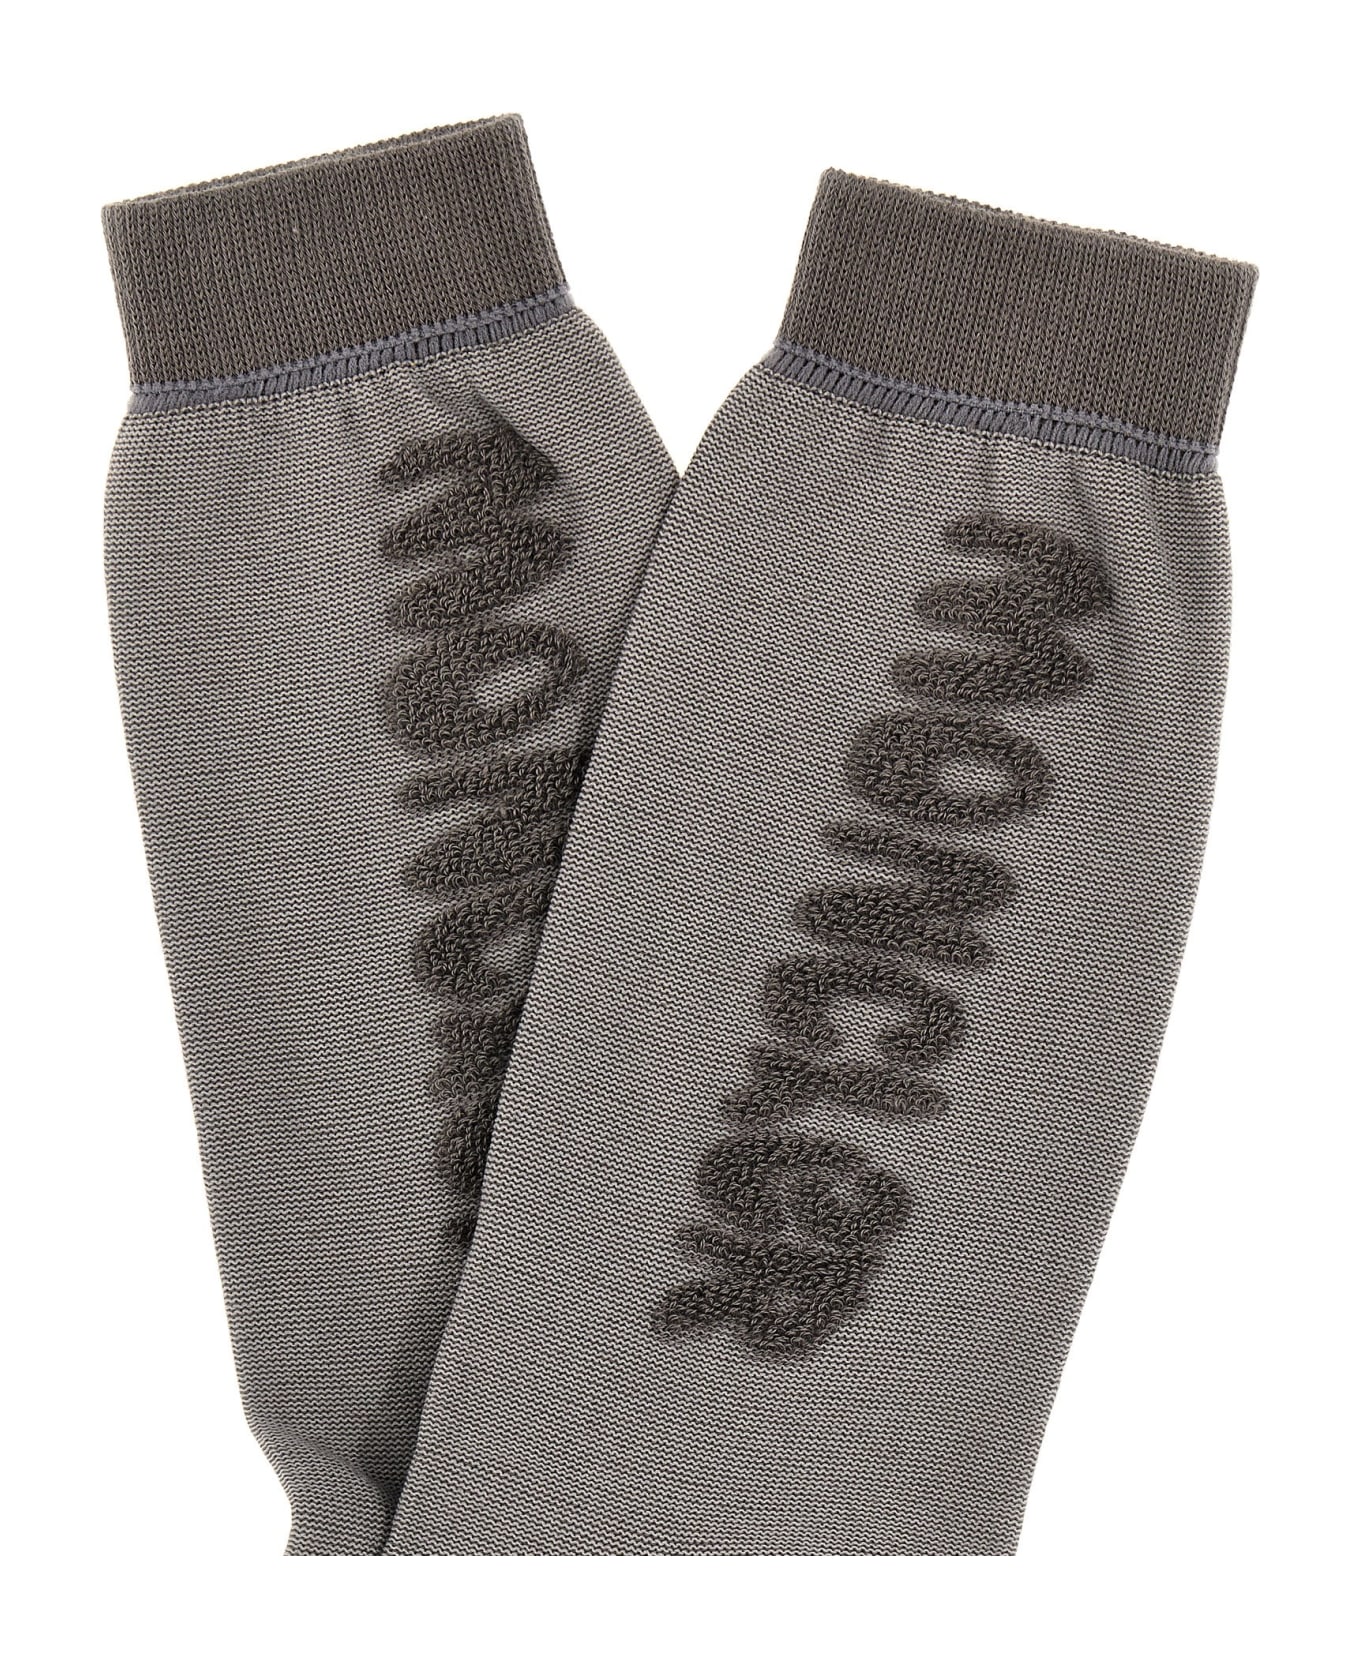 Moncler Genius X Salehe Bembury Socks - Gray 靴下